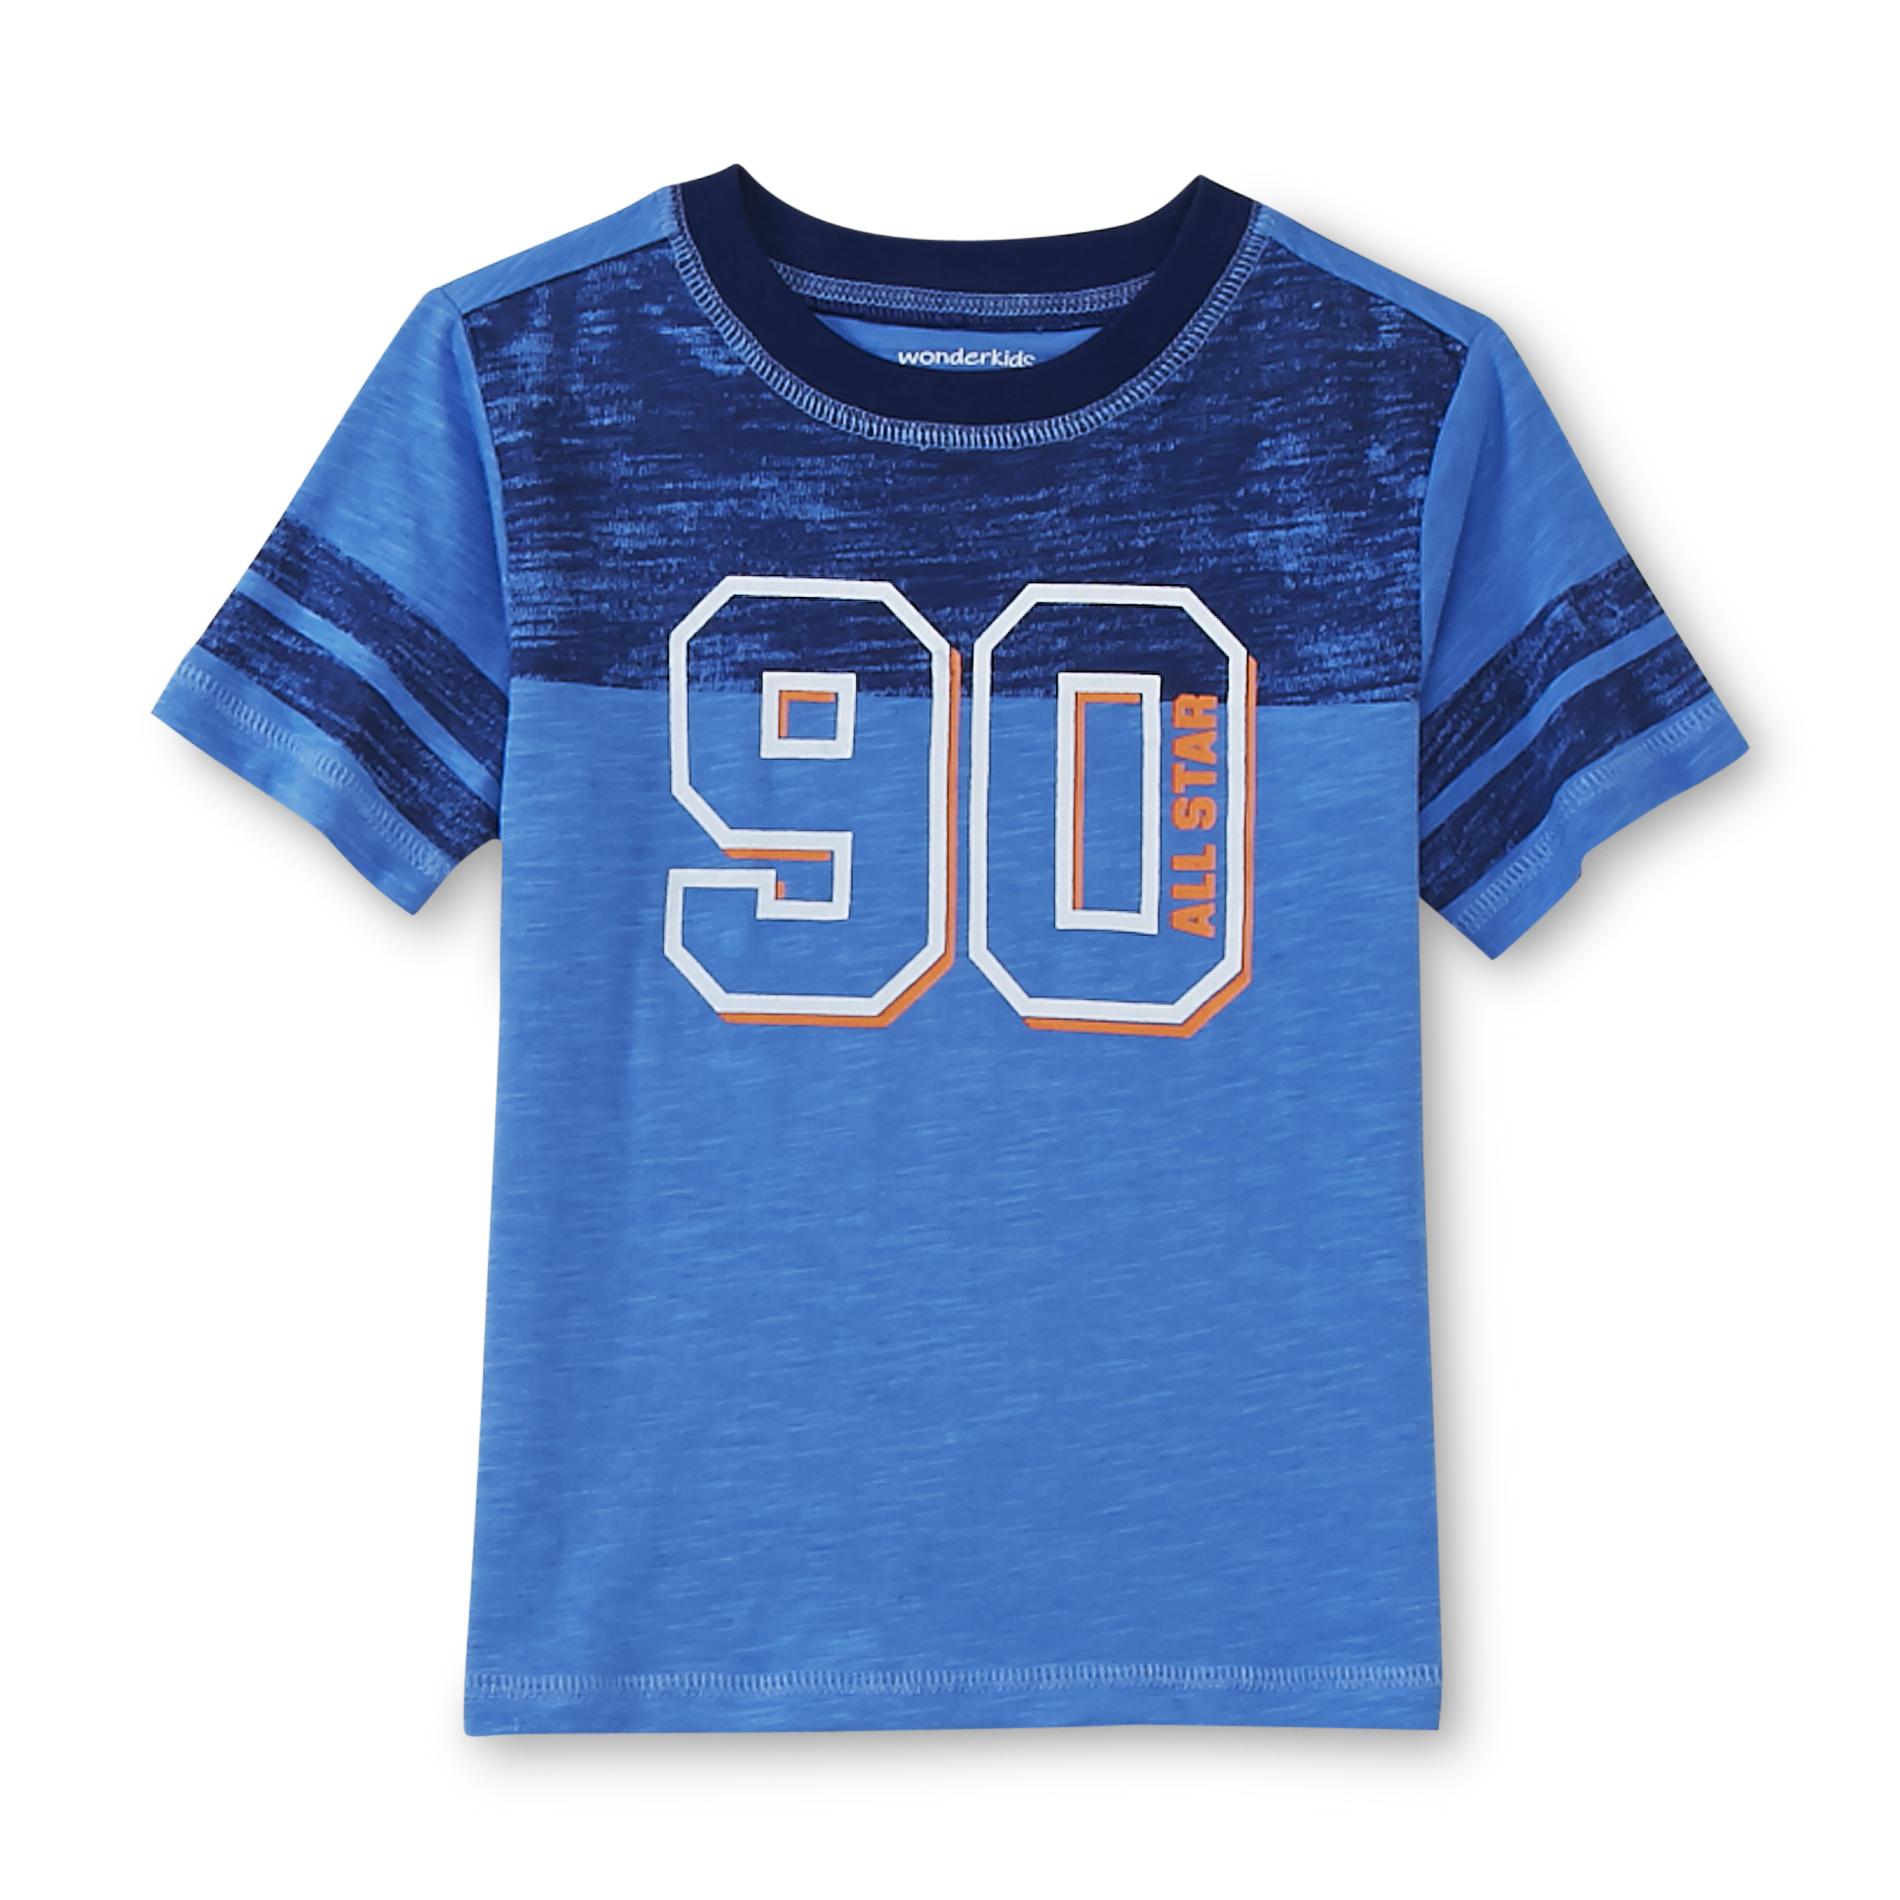 WonderKids Infant & Toddler Boy's Graphic T-Shirt - 90 All Star